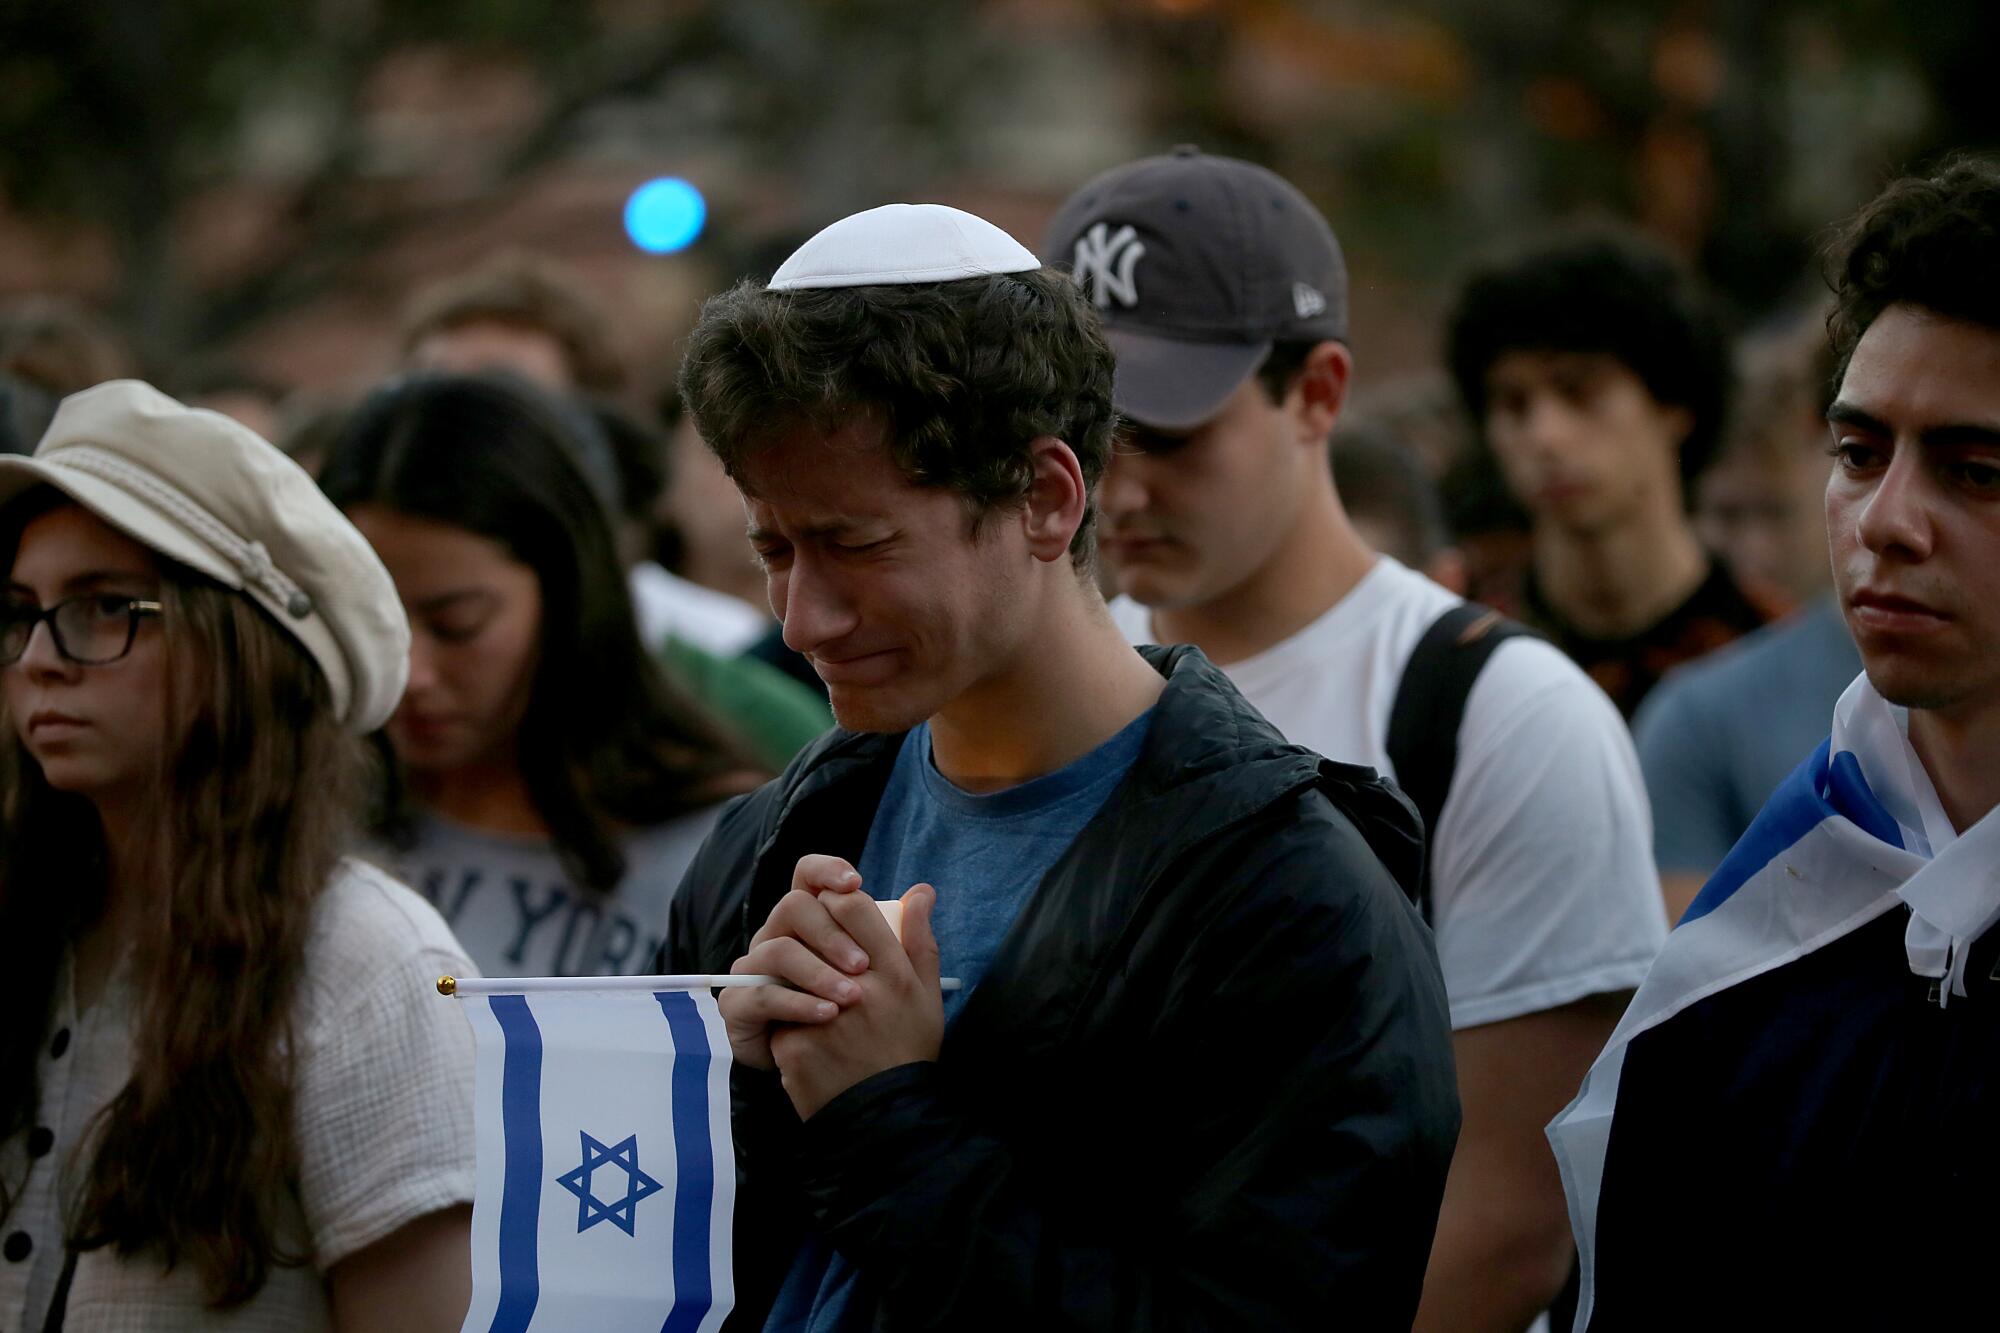 A student in a yarmulke holds an Israeli flag.